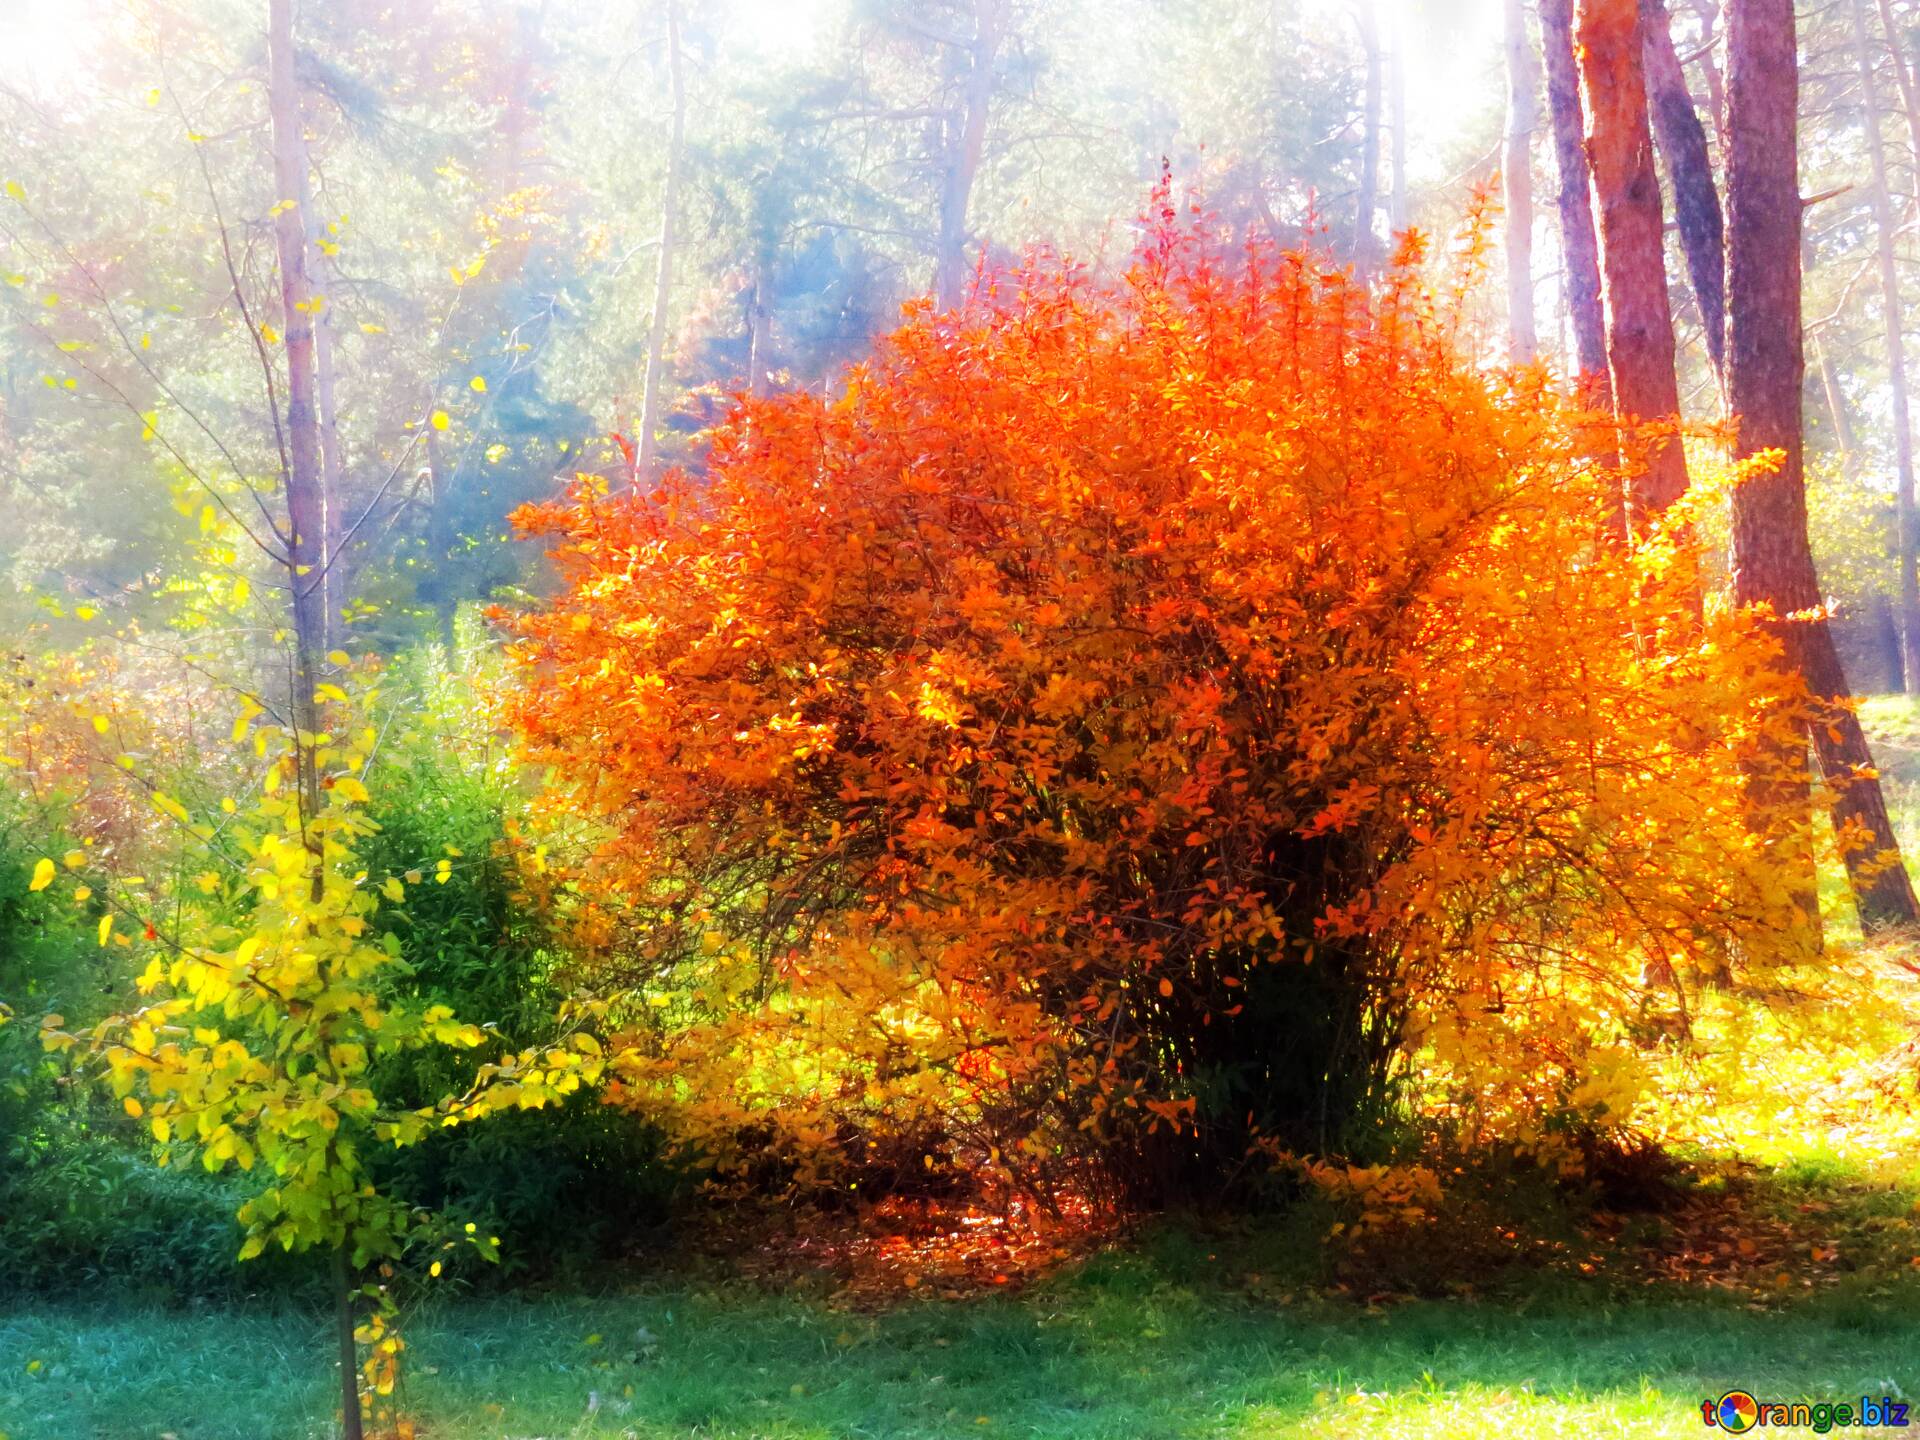 Download Free Picture Soft Blurred Landscape Autumn Forest On CC BY License Free Image Stock TOrange.biz Fx №213275